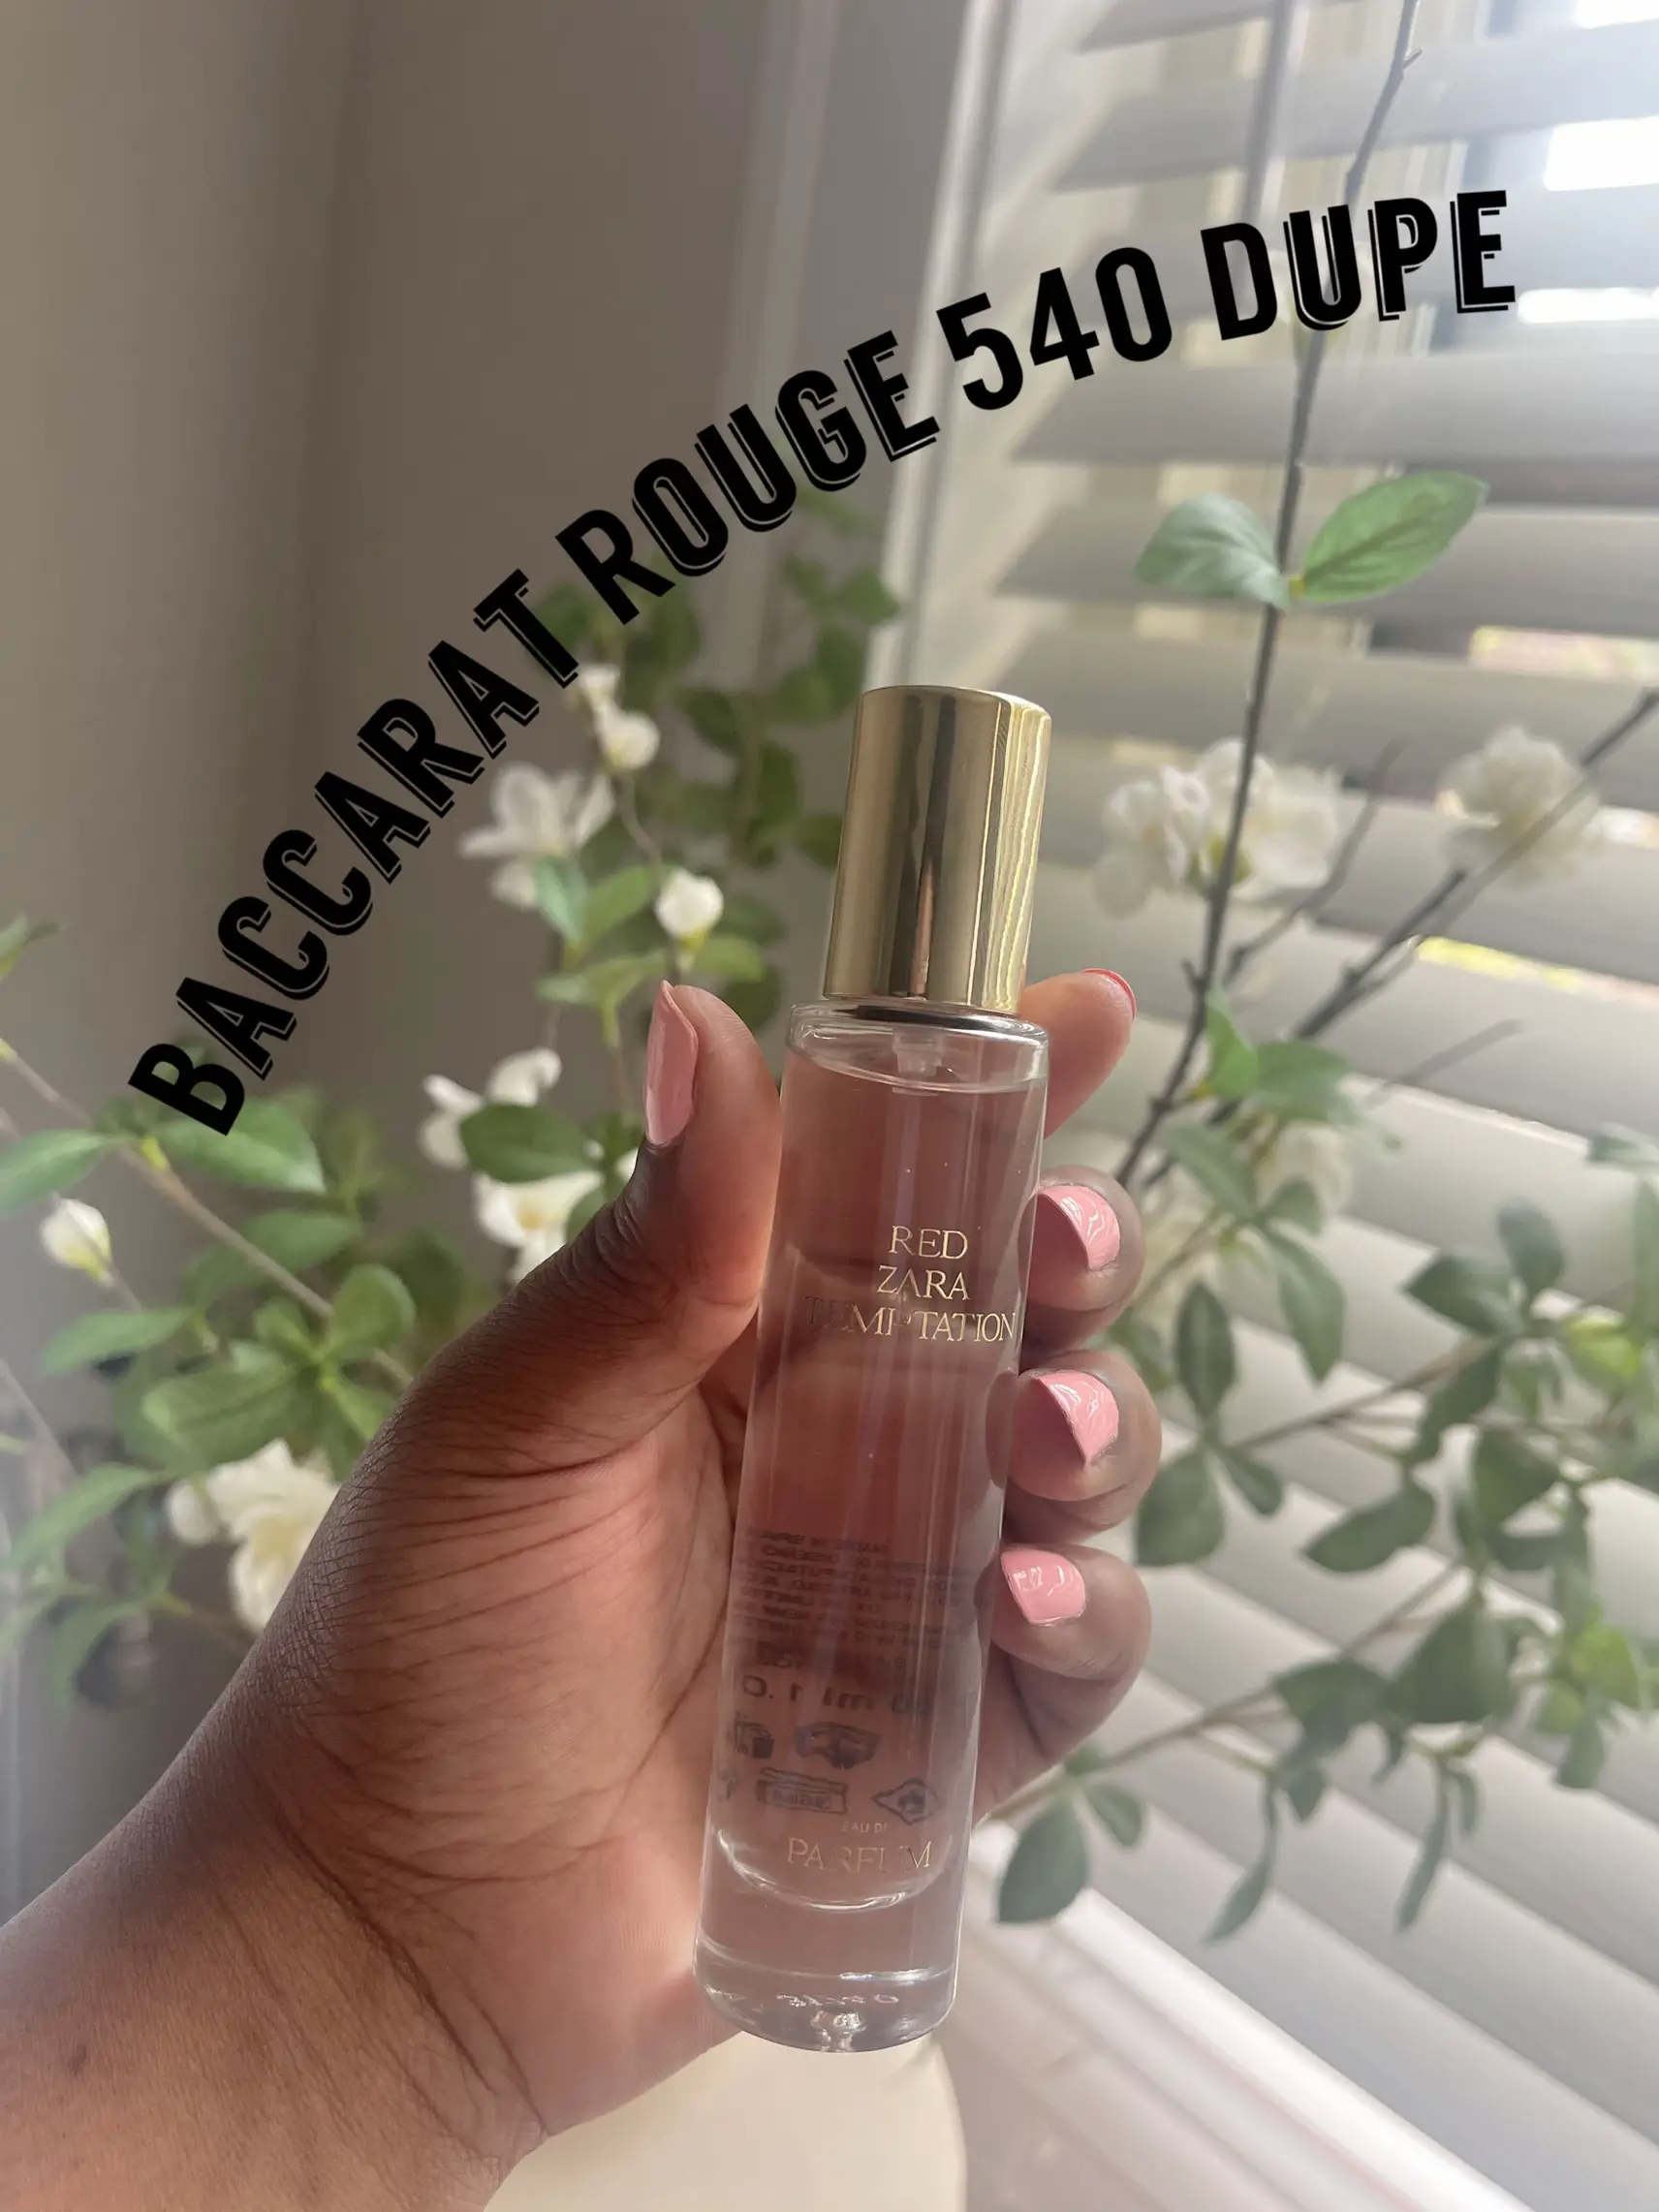 ZARA RED TEMPTATION, MFK Baccarat Rouge 540 Dupe!!!, Review Parfum Zara